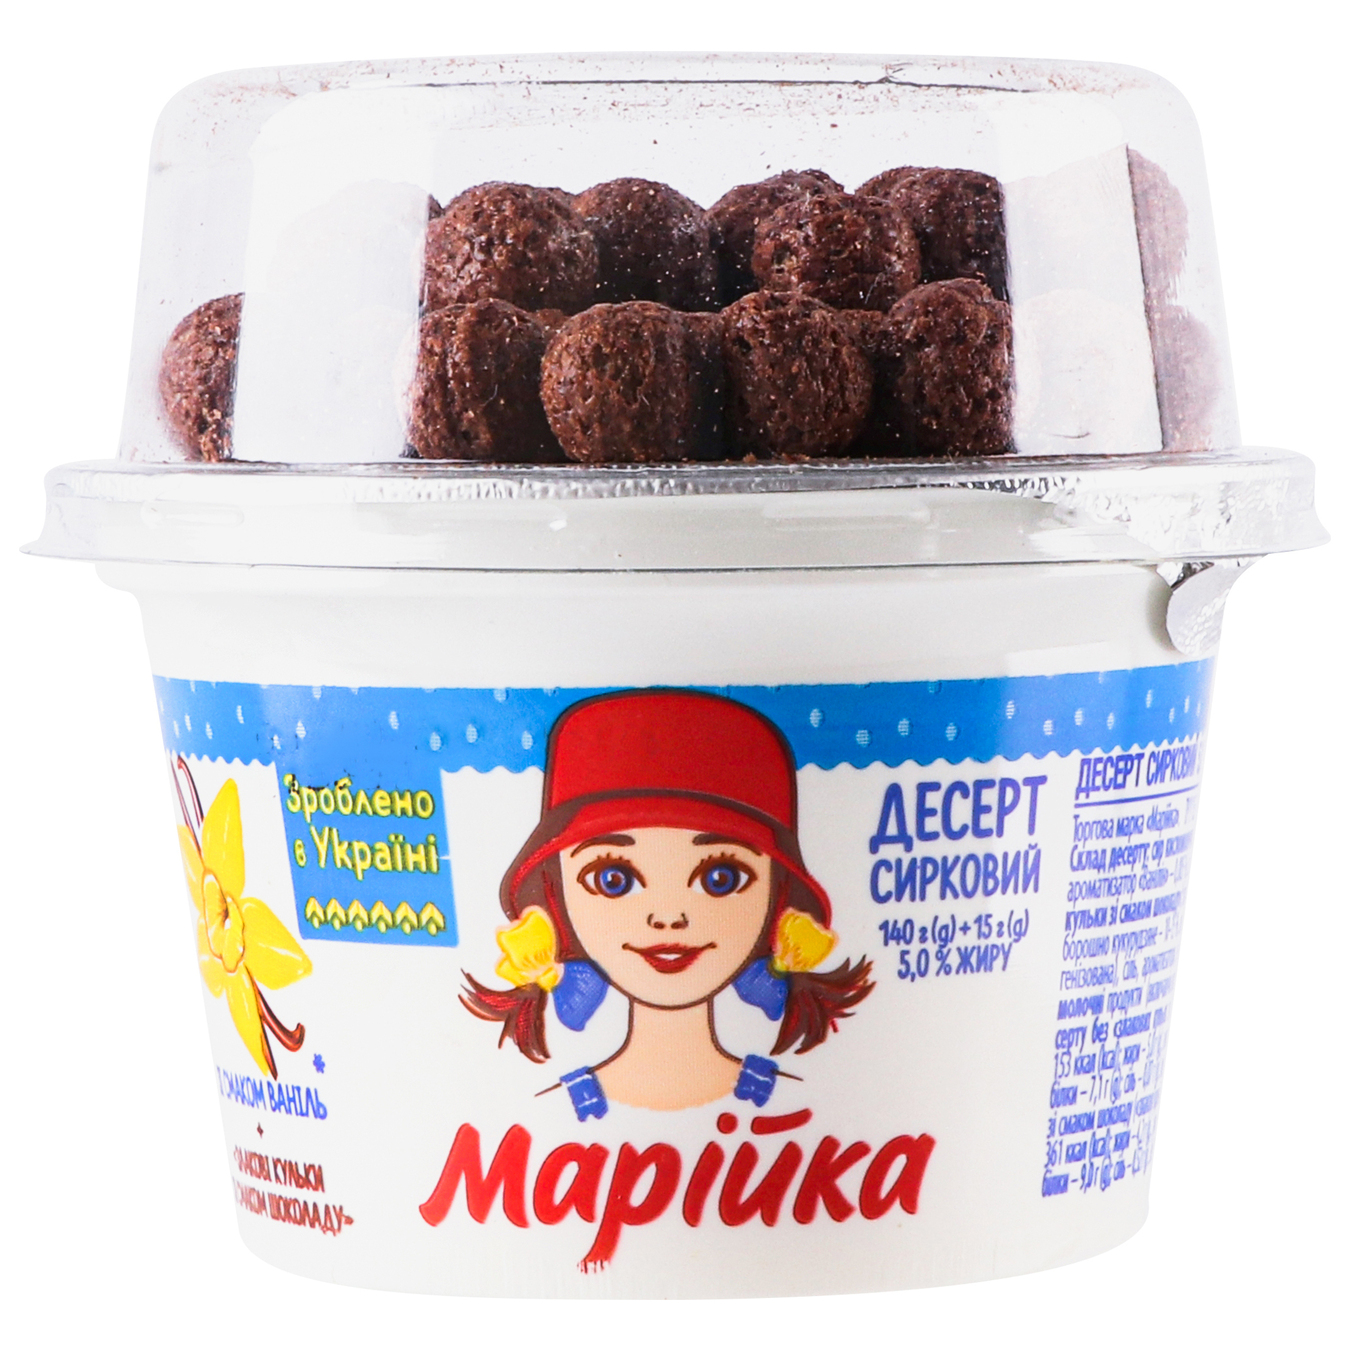 Mariyka Cheese dessert with vanilla flavor + cereal balls with chocolate flavor0,05 140g